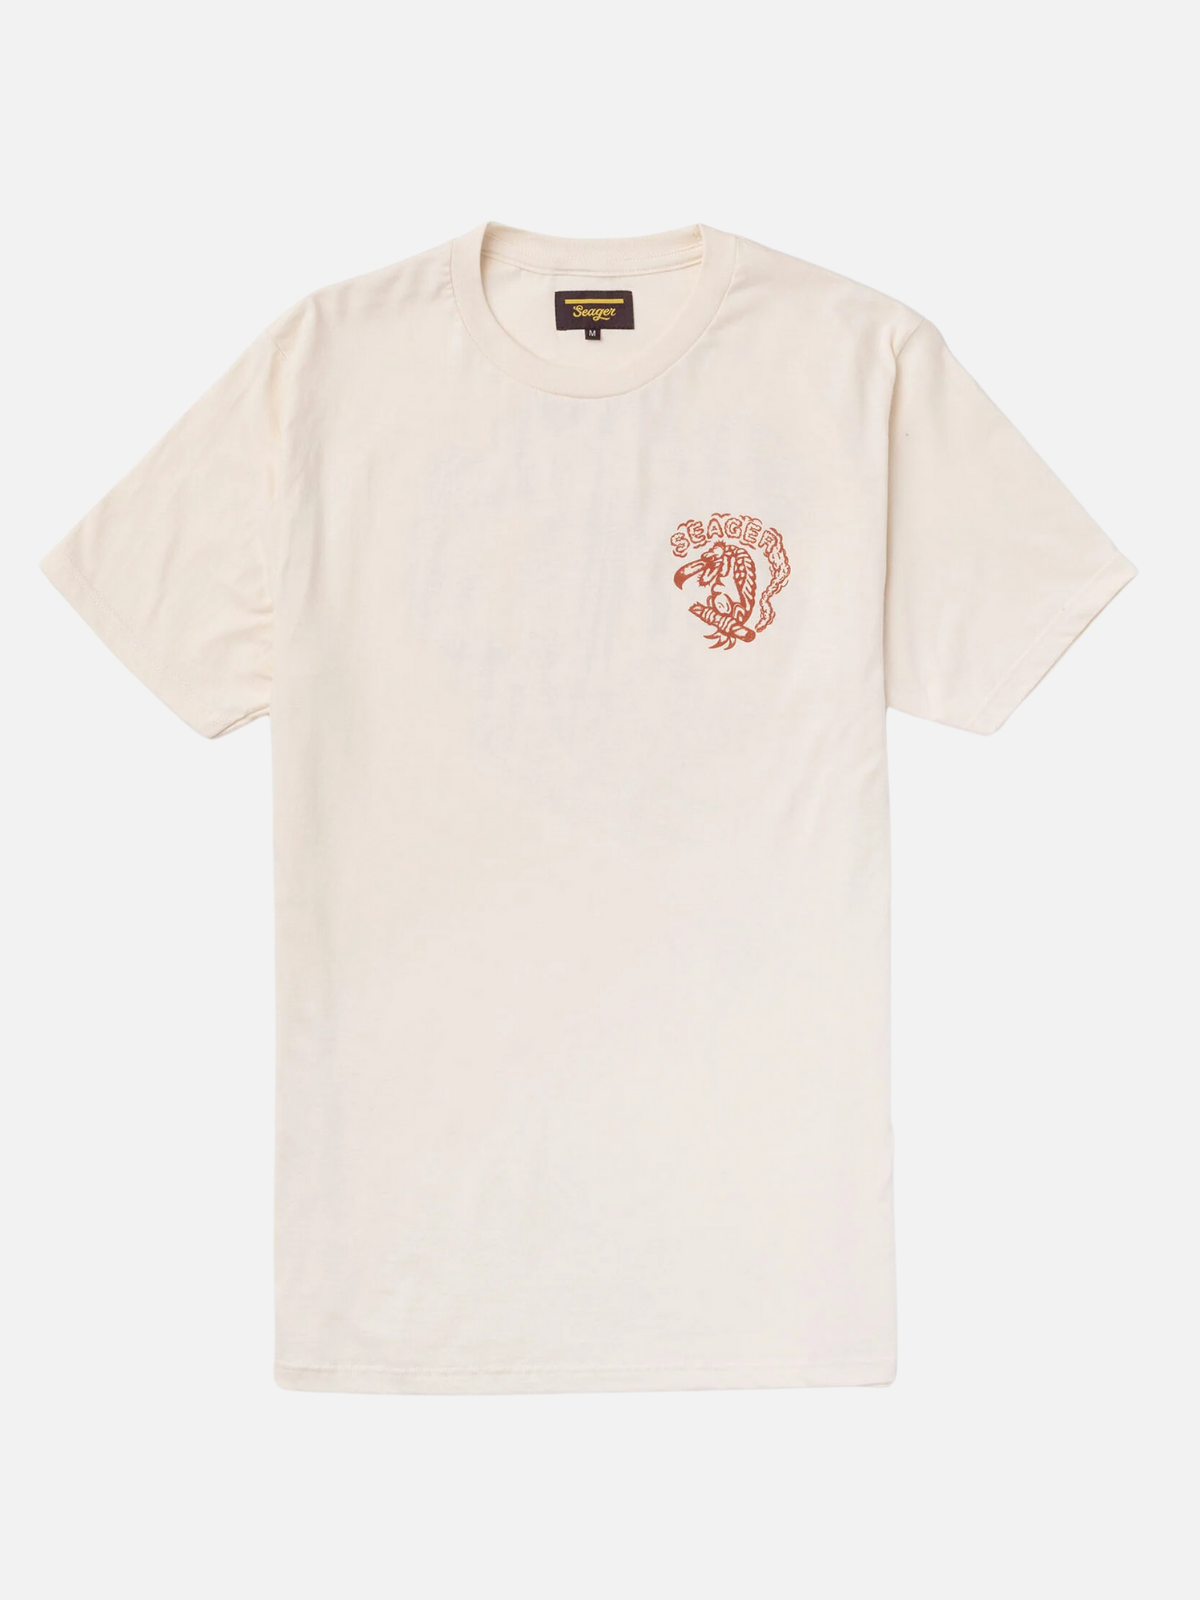 seager jonny tee cream burnt orange 100% cotton graphic t-shirt kempt athens ga georgia men's clothing store